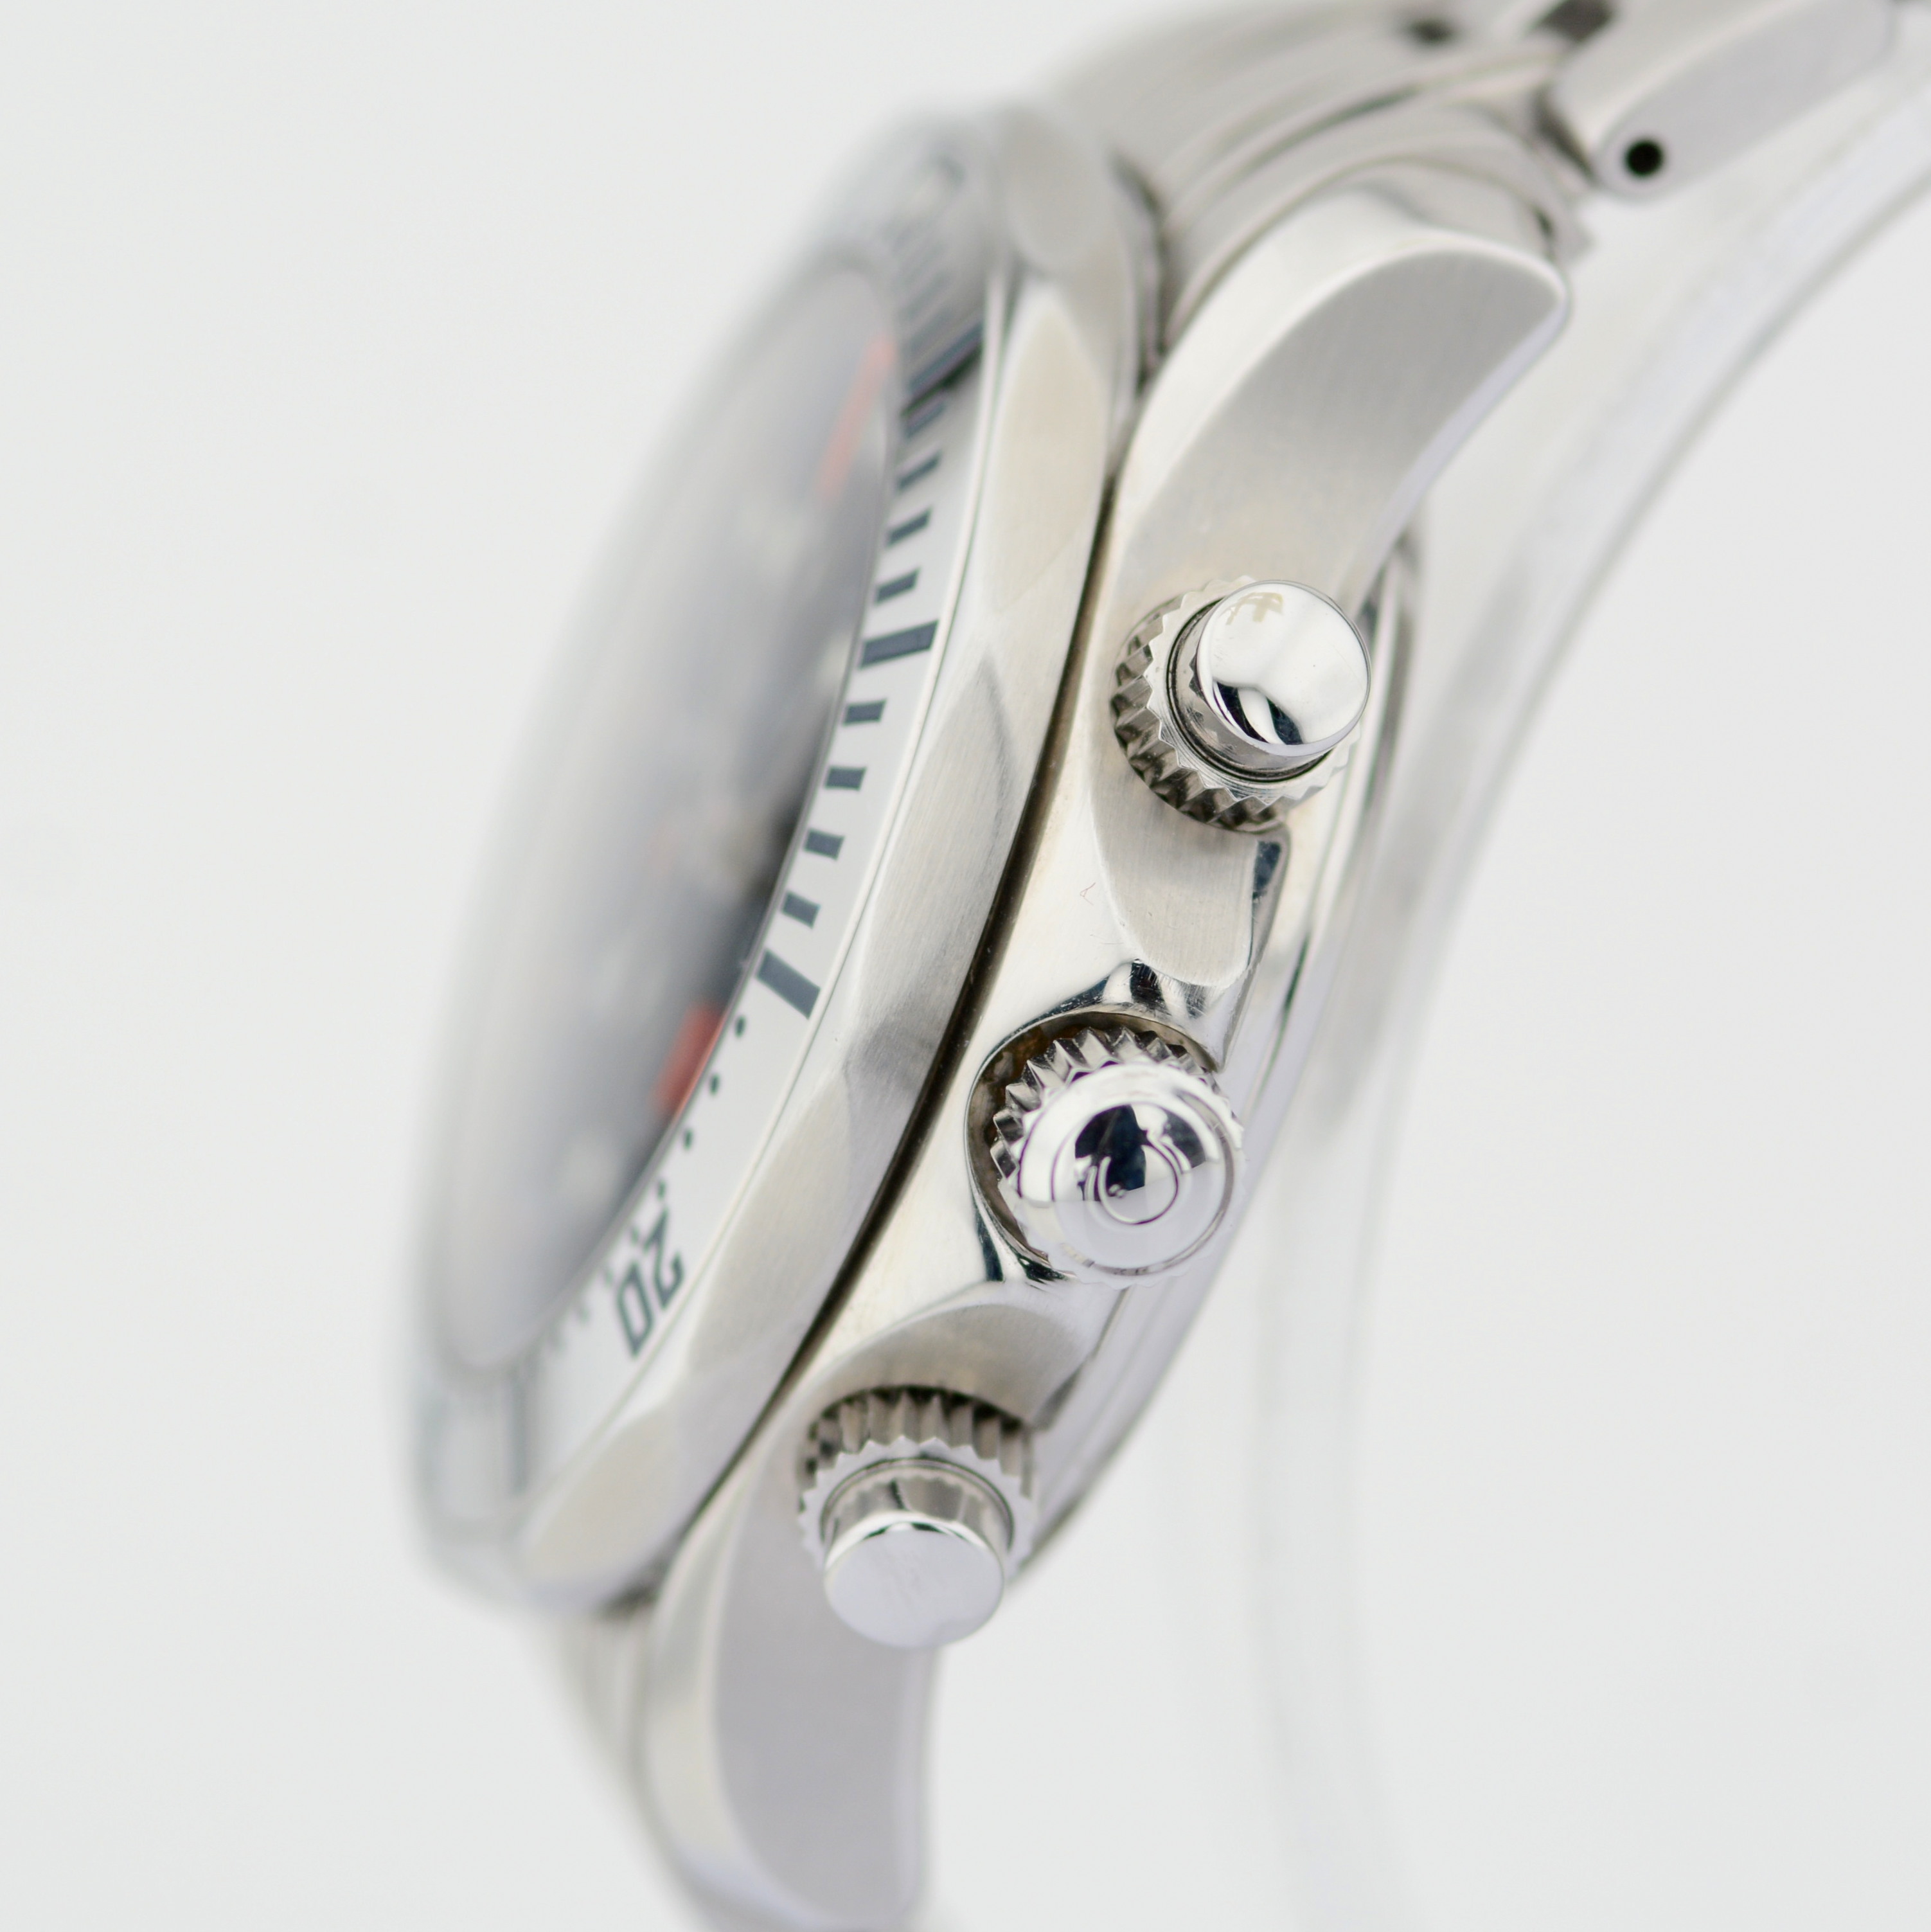 Omega / Seamaster Professional Chronemeter 178.0514 Chronograph - Gentlmen's Steel Wrist Watch - Image 5 of 12